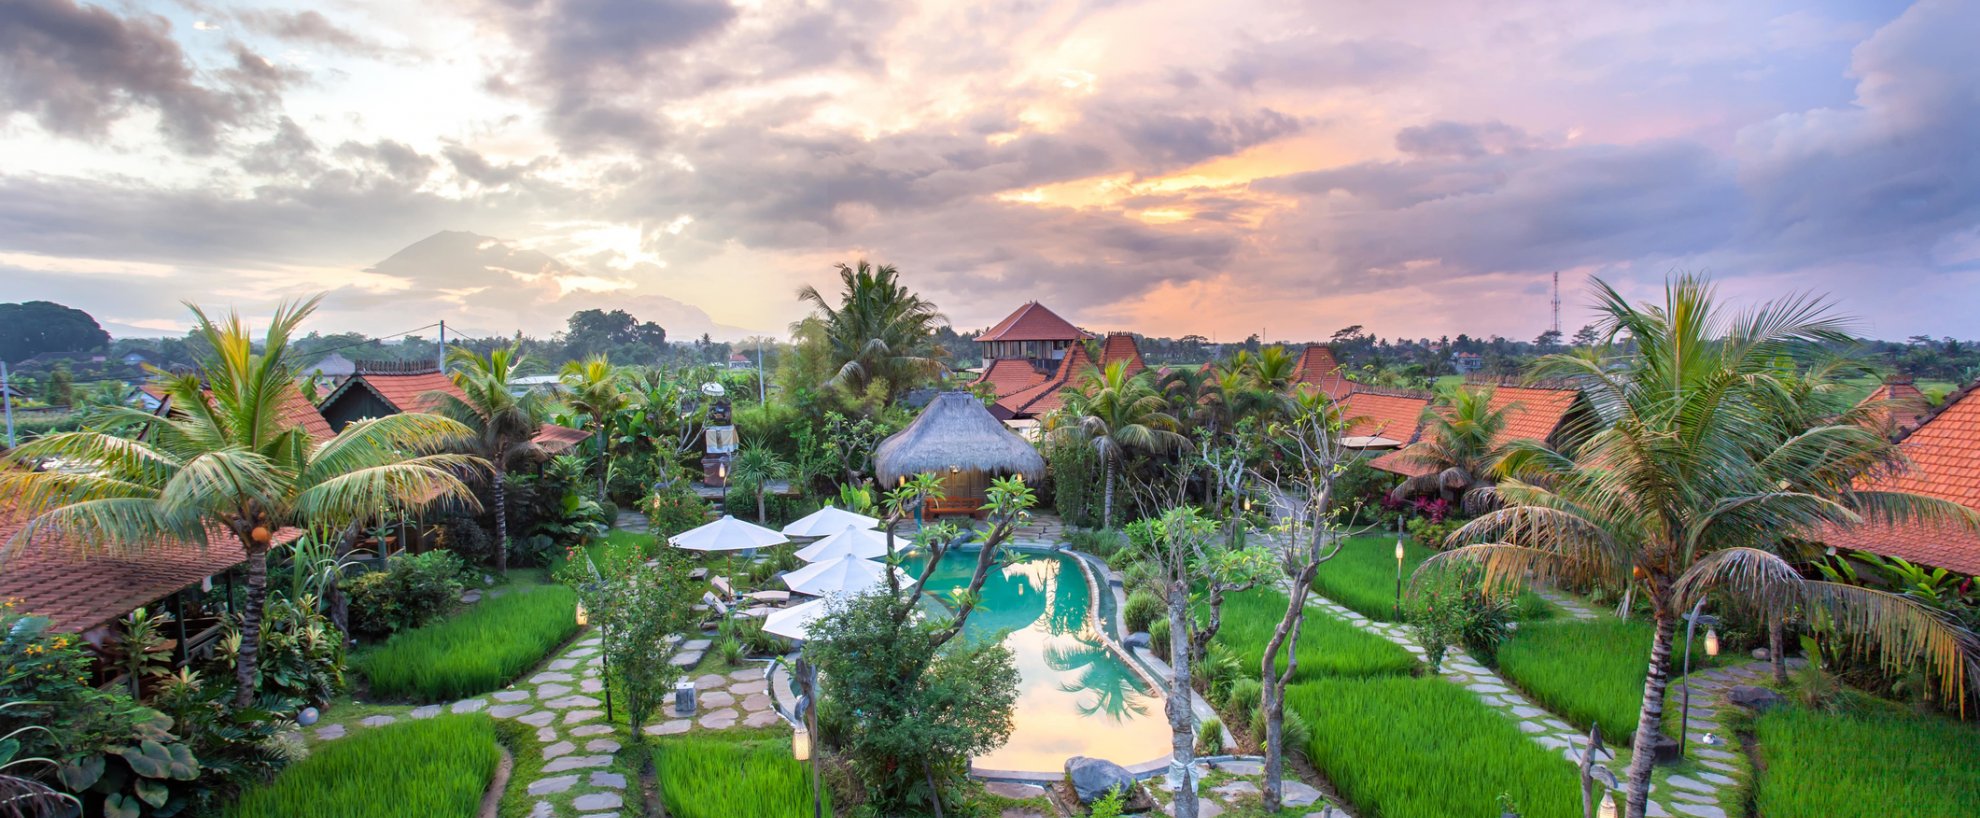 yoga urlaub reisen indonesien bali arya arkananta eco resort spa anlage oben 